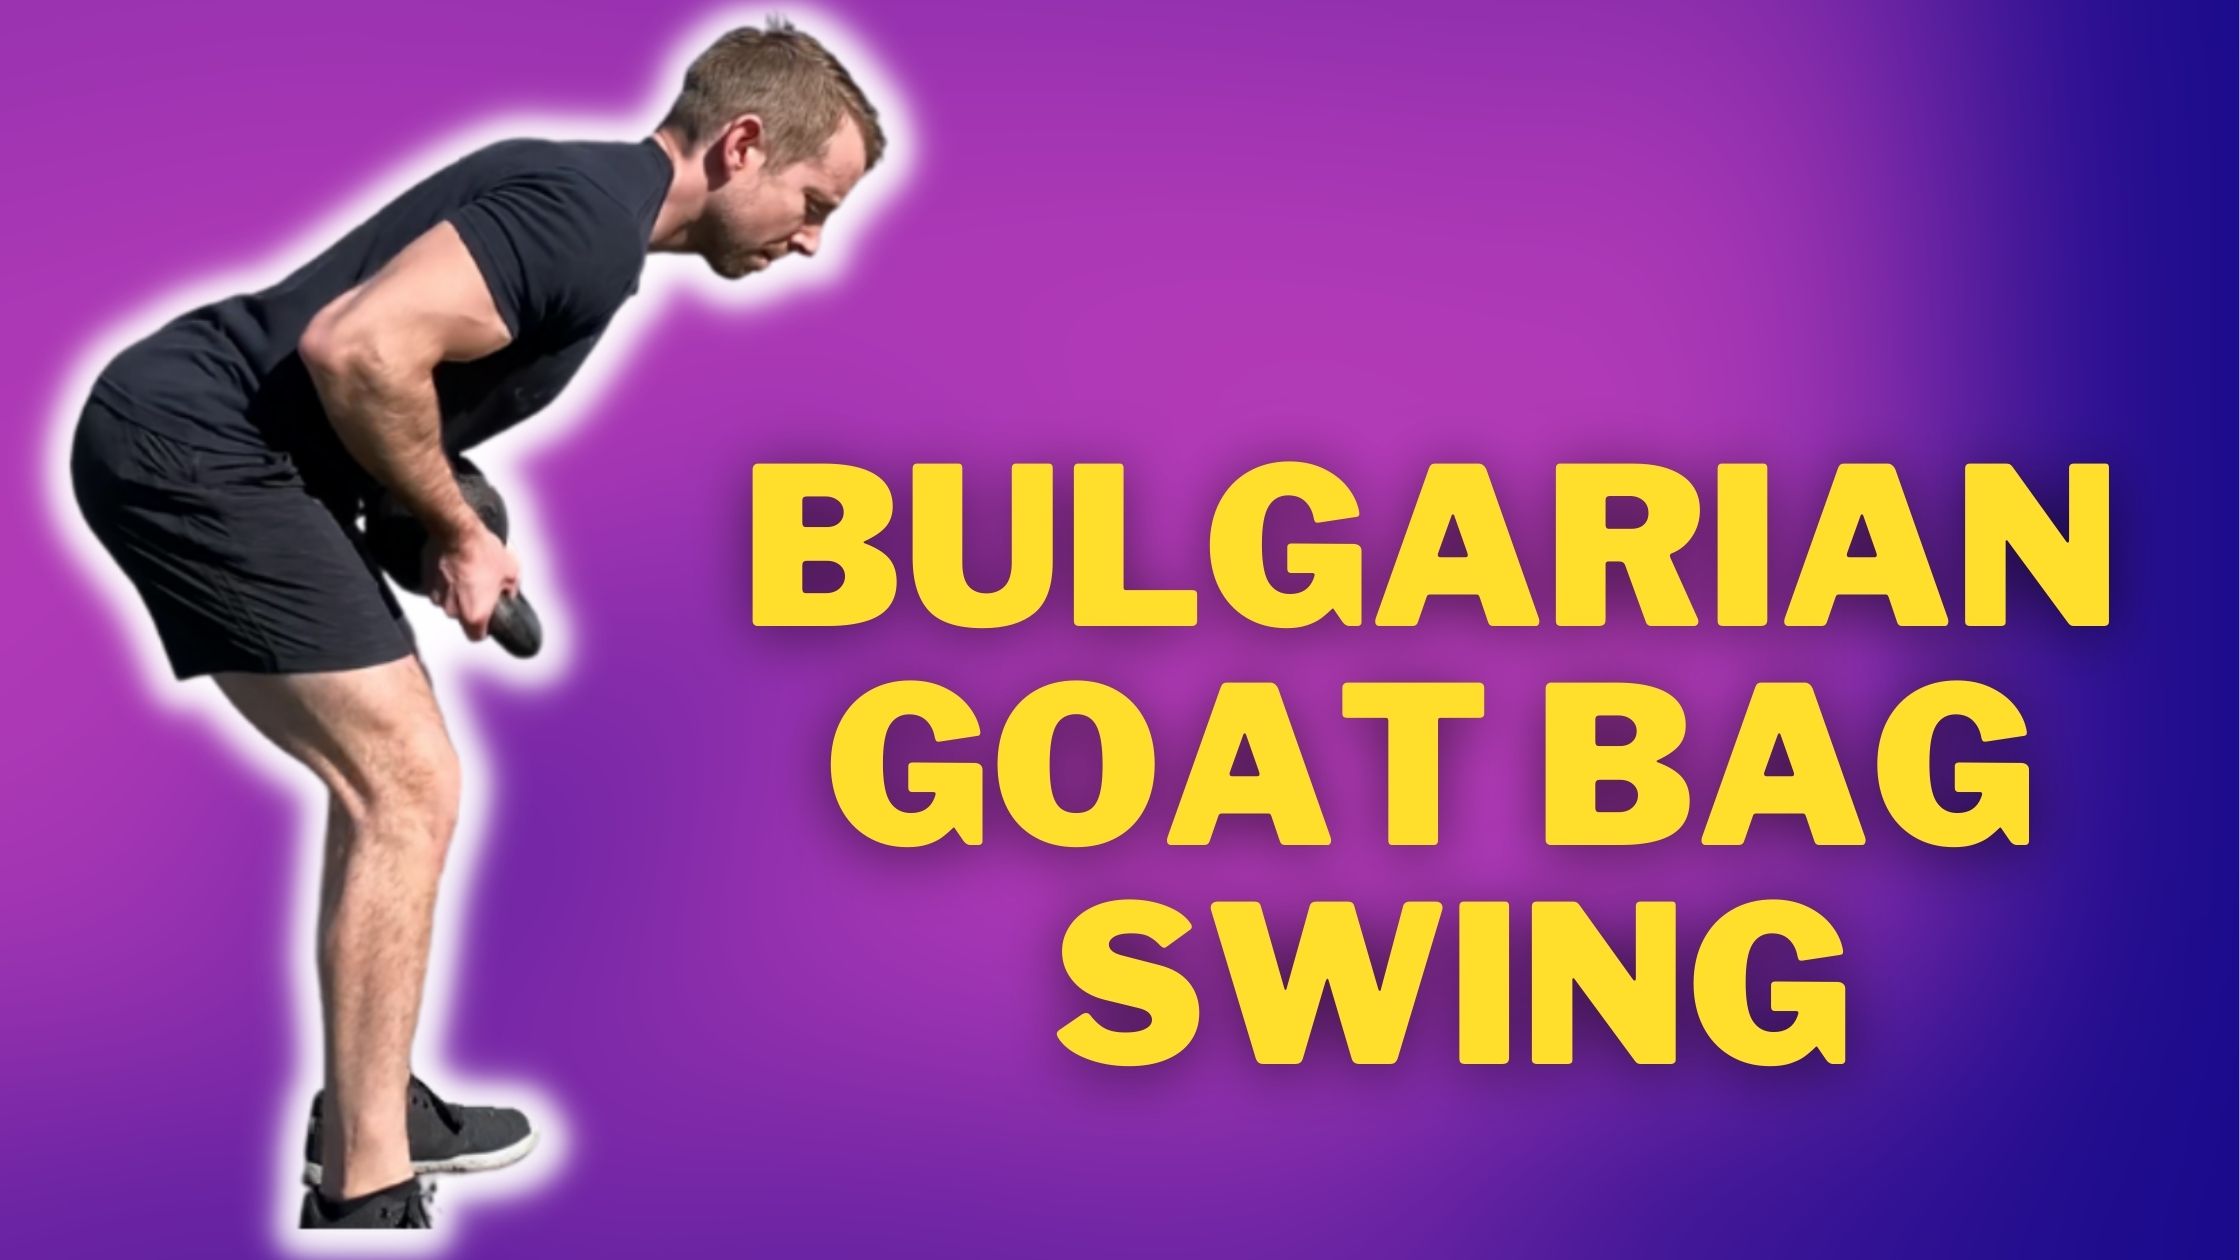 The Bulgarian Goat Bag Swing